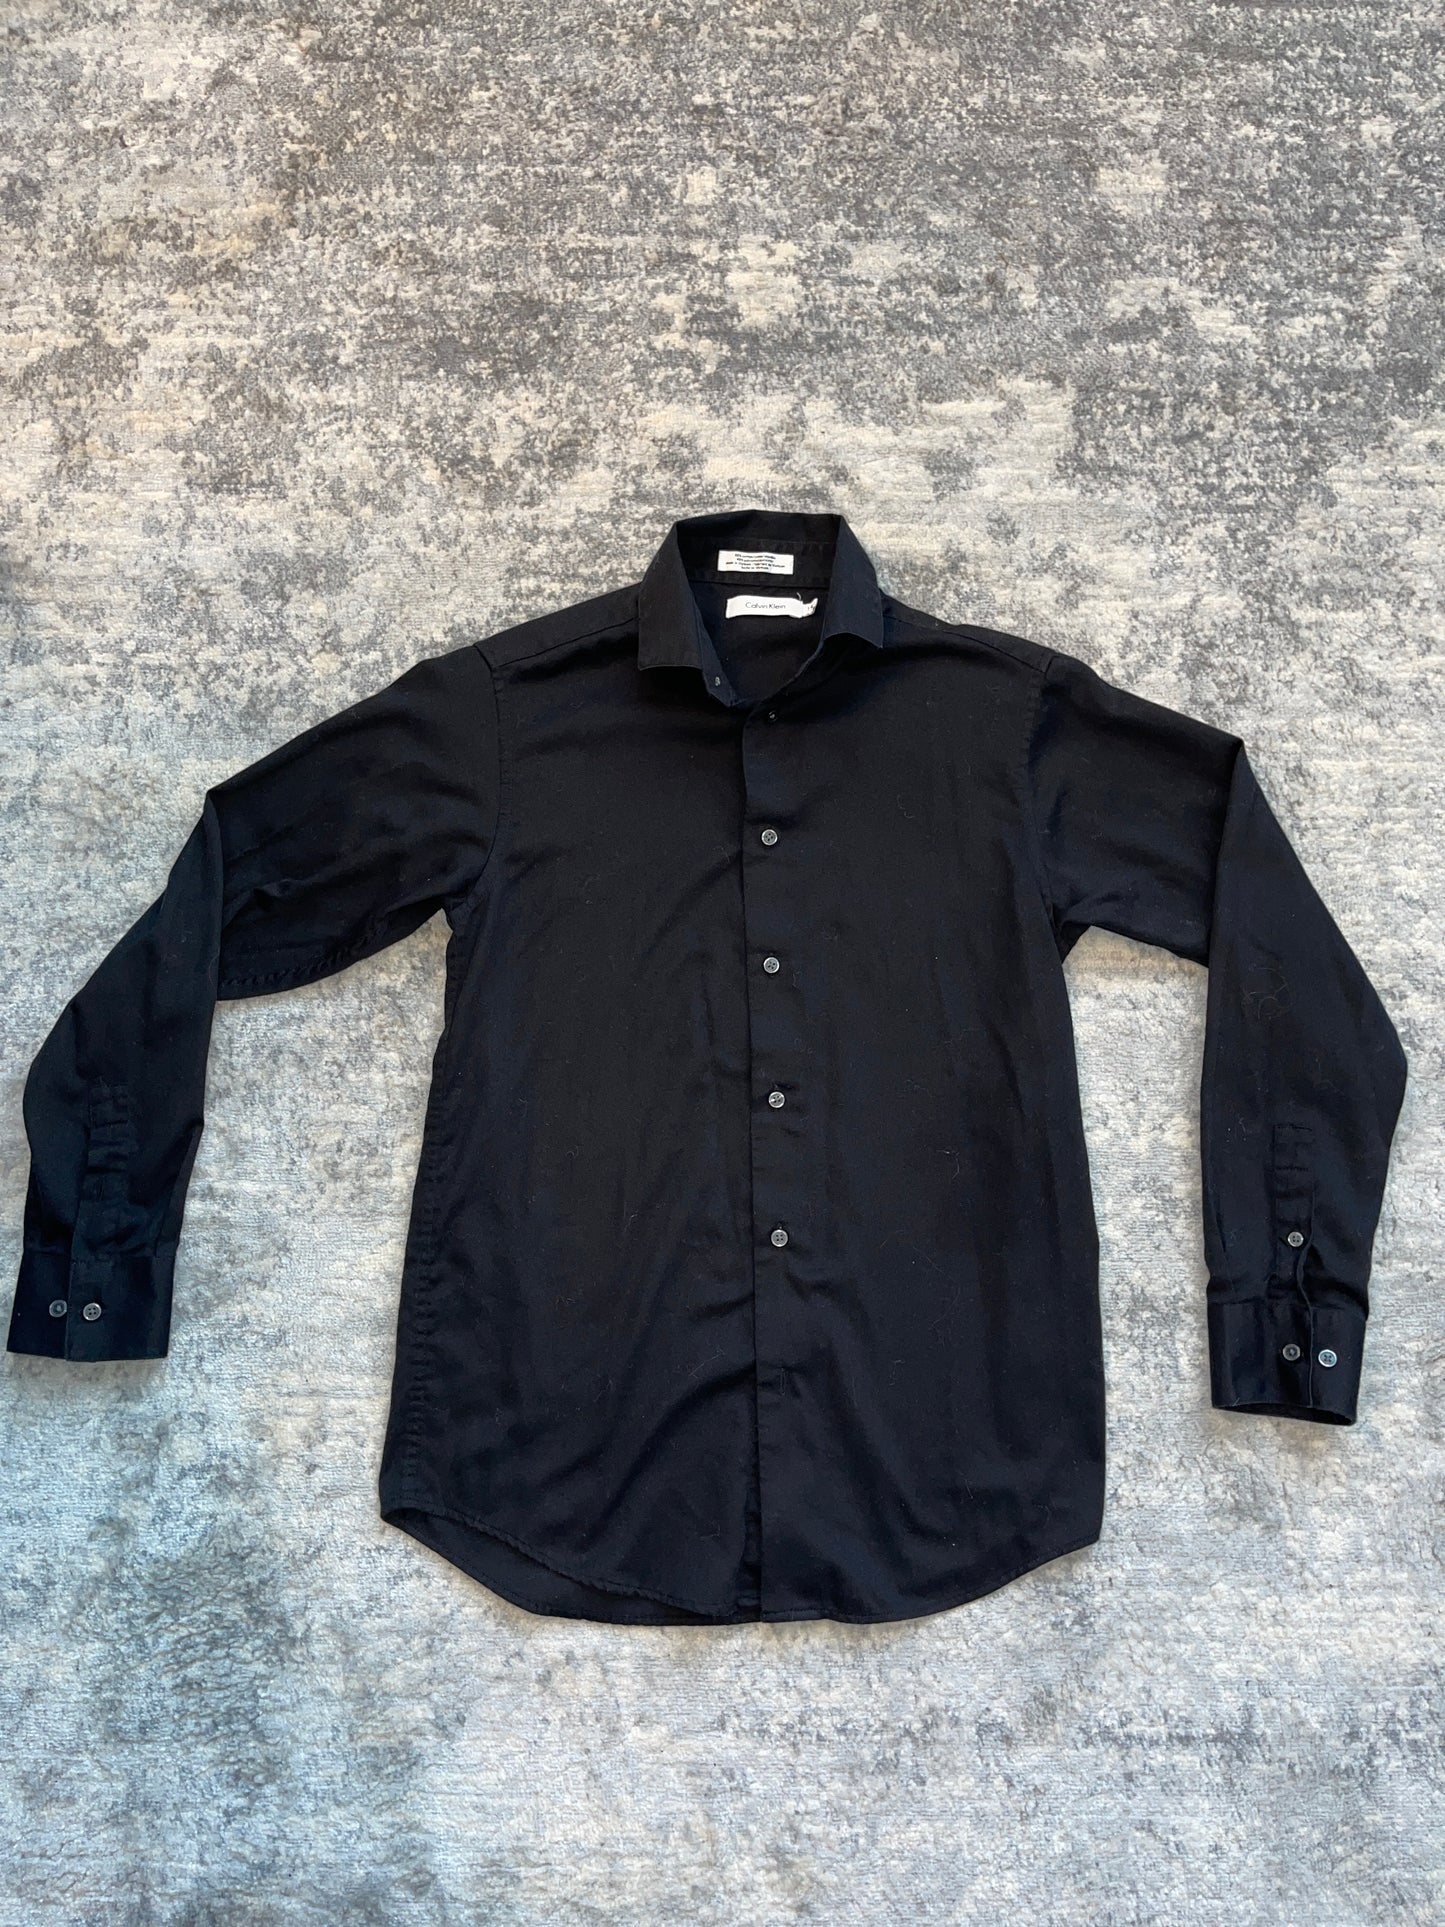 Calvin Klein Boys Black Sateen Dress Long-Sleeved Button-Down Shirt size 14- PPU Montgomery